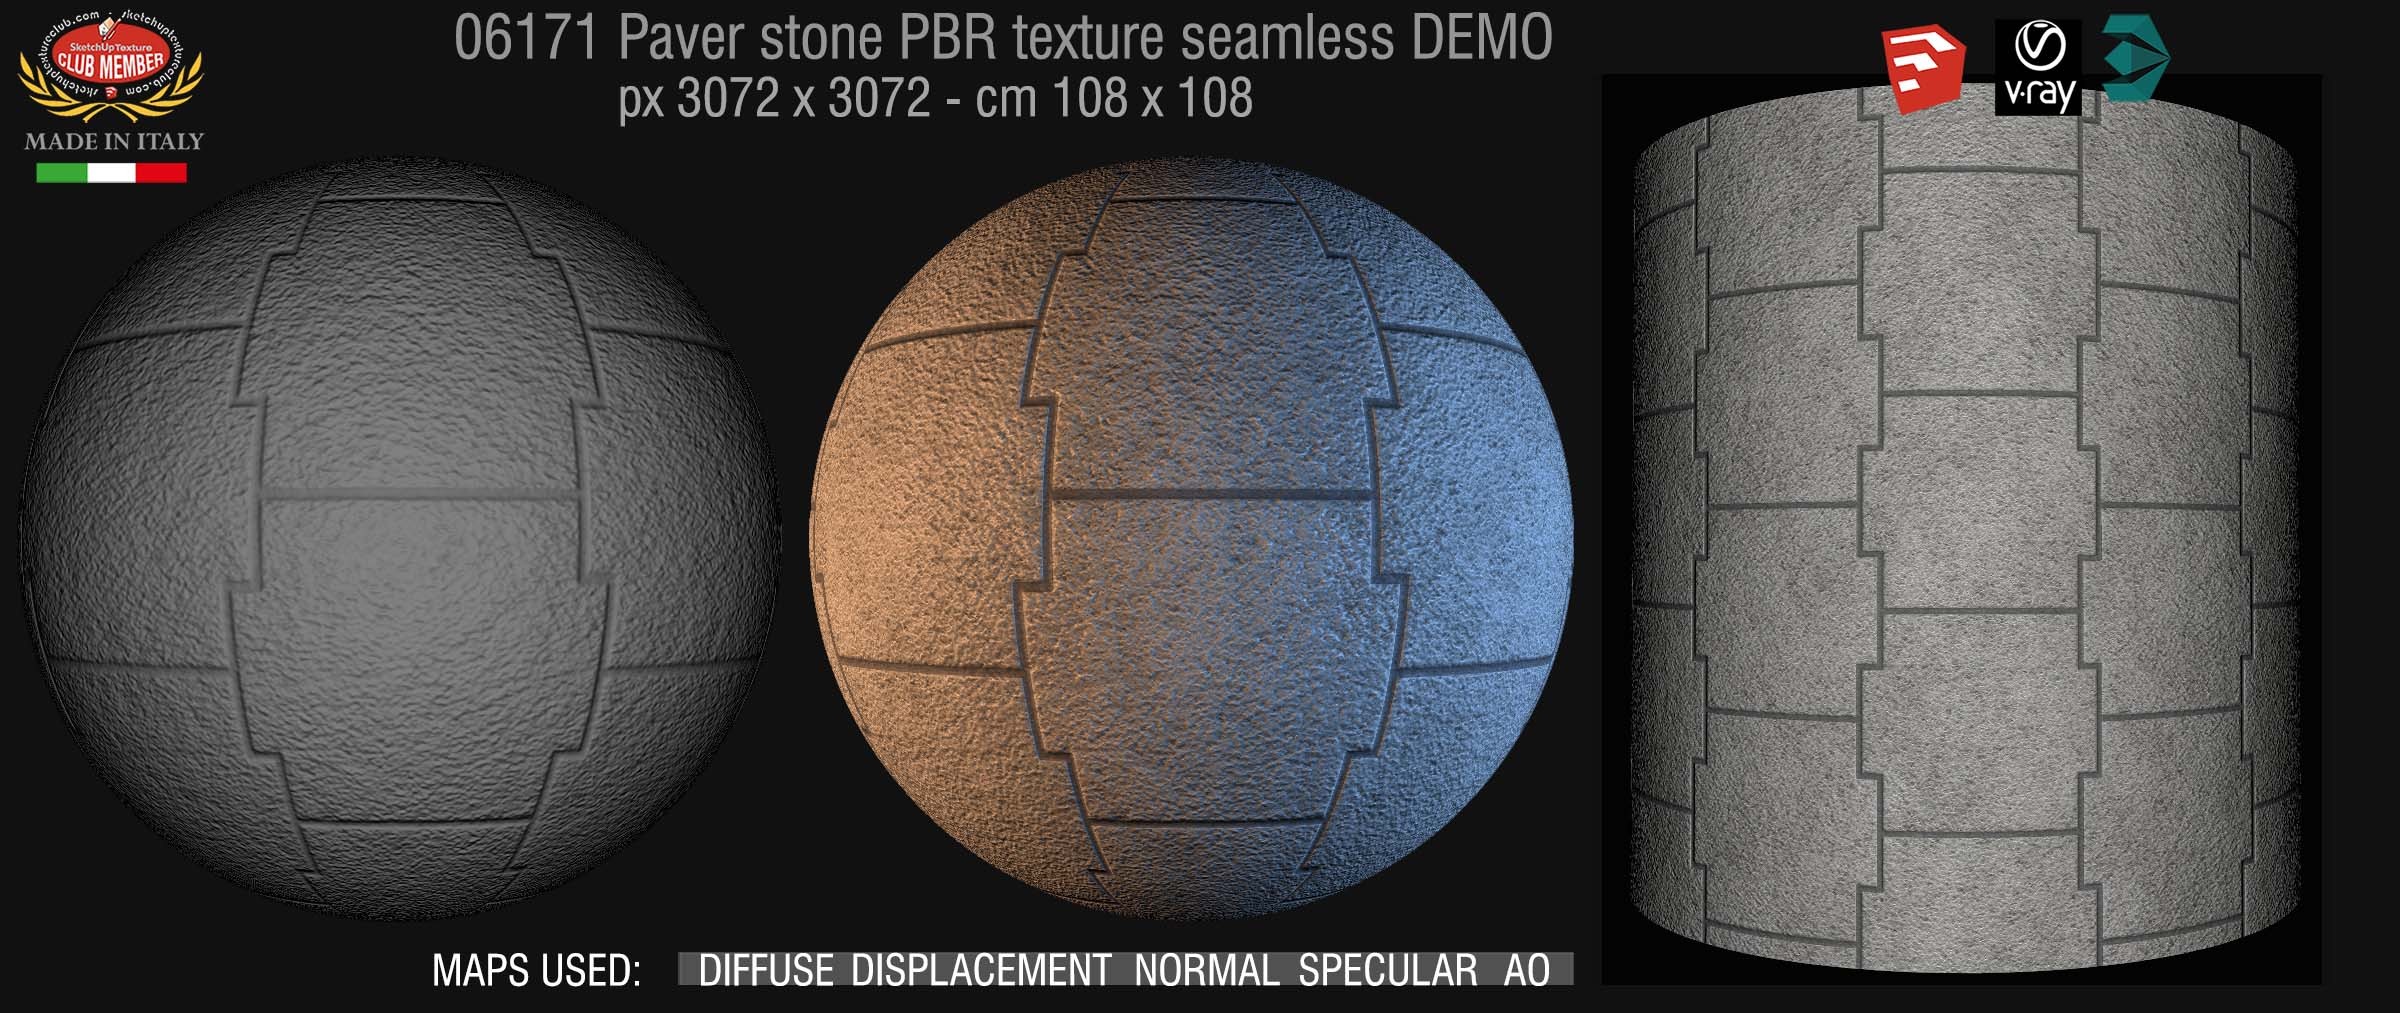 06171 paver stone PBR texture seamless DEMO